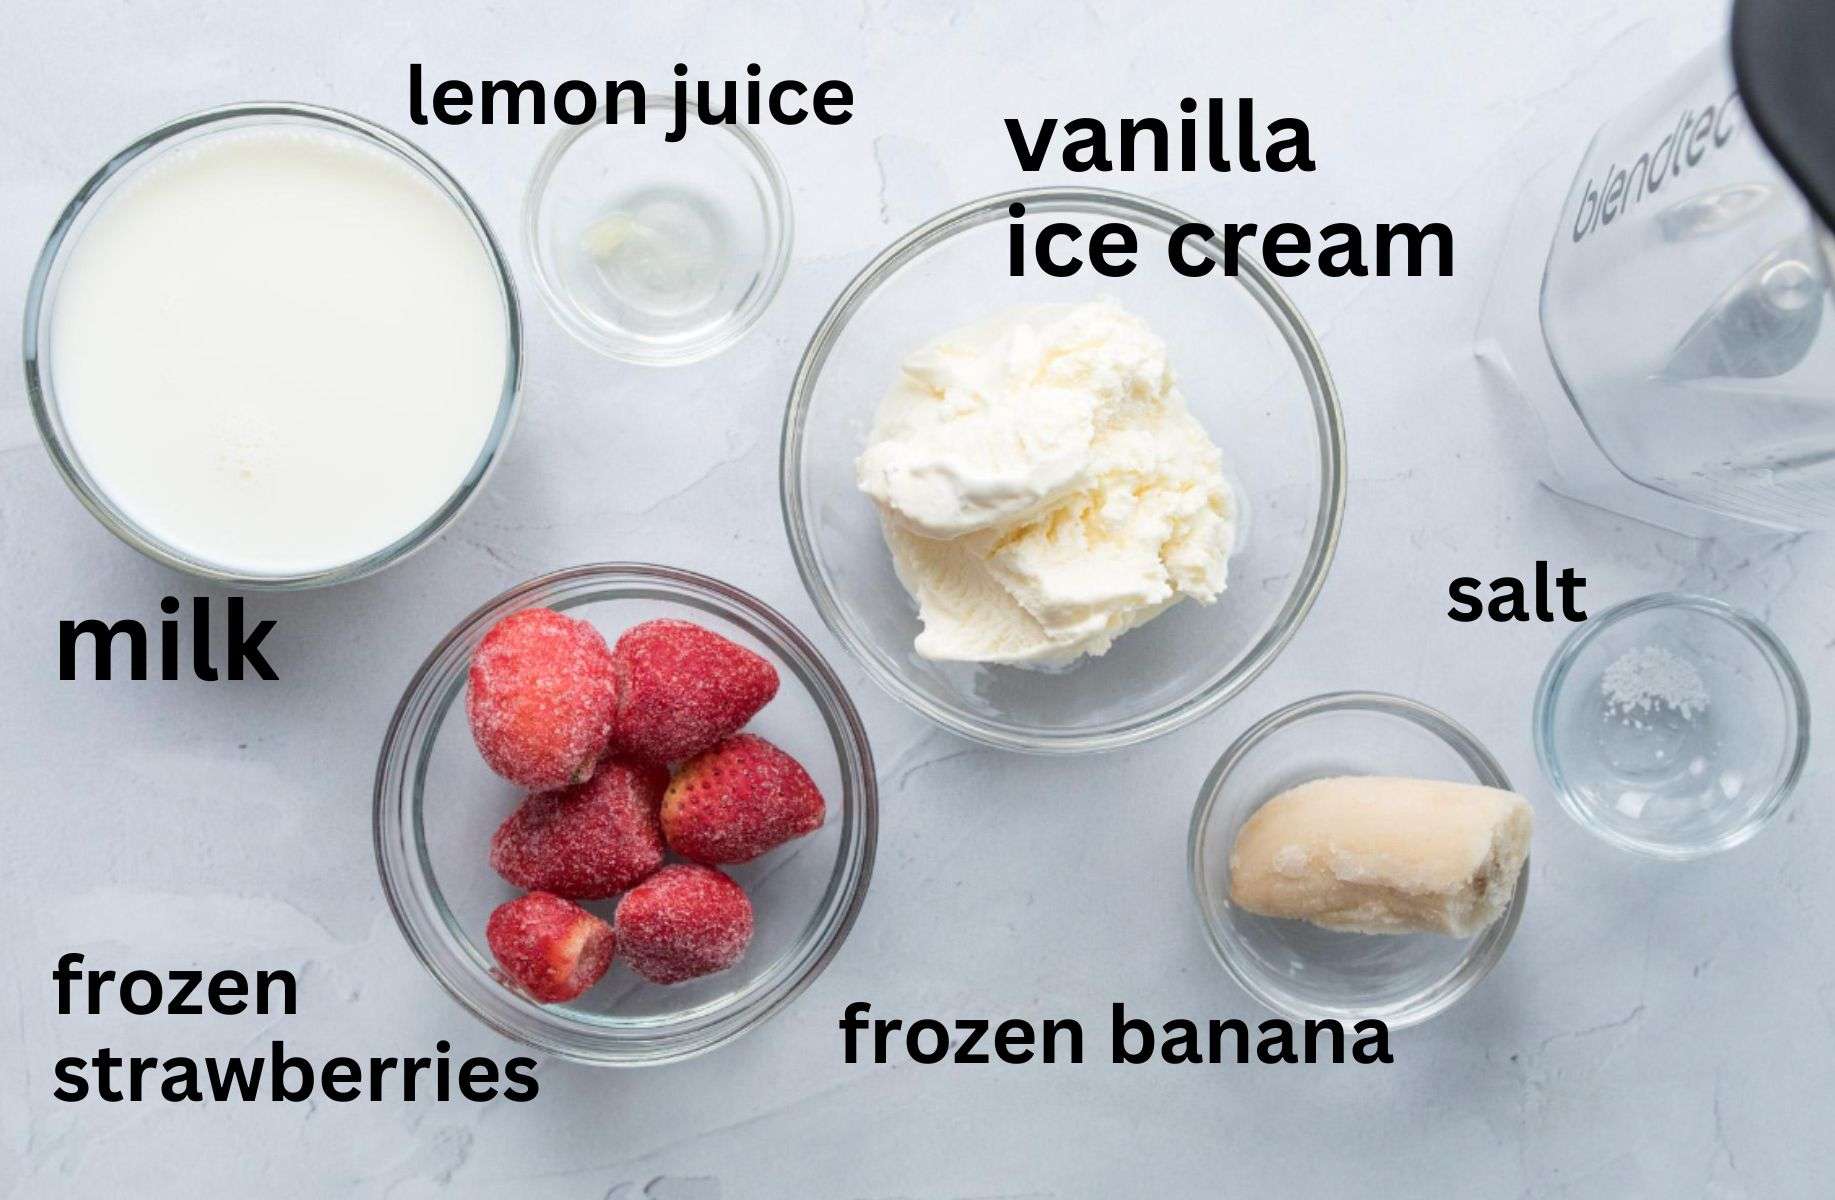 strawberries, banana, milk, ice cream on table